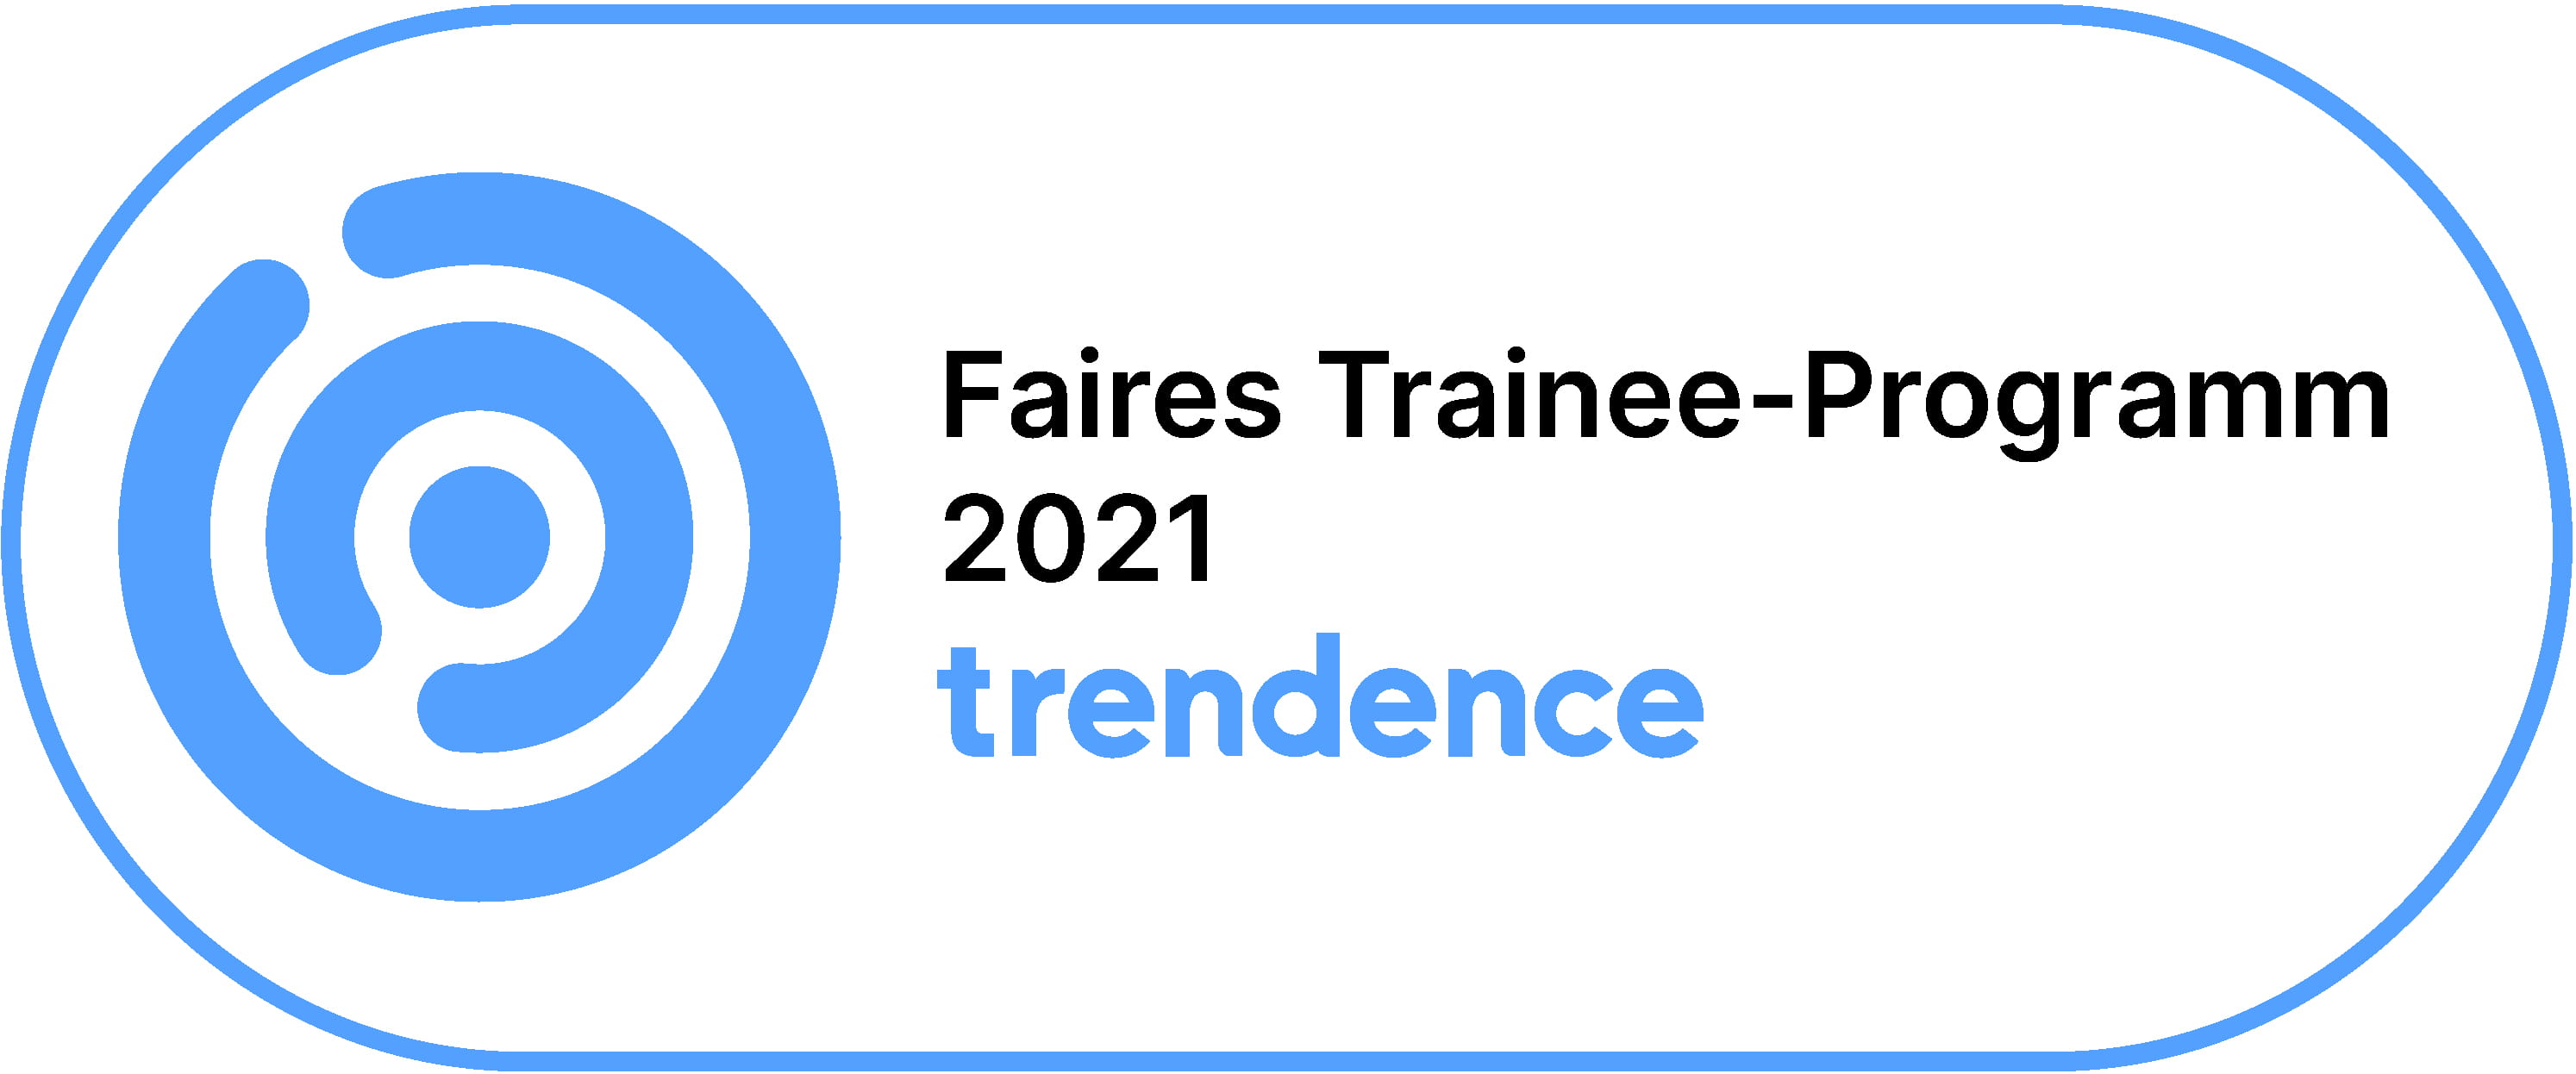 Faires Trainee-Programm 2021 trendence